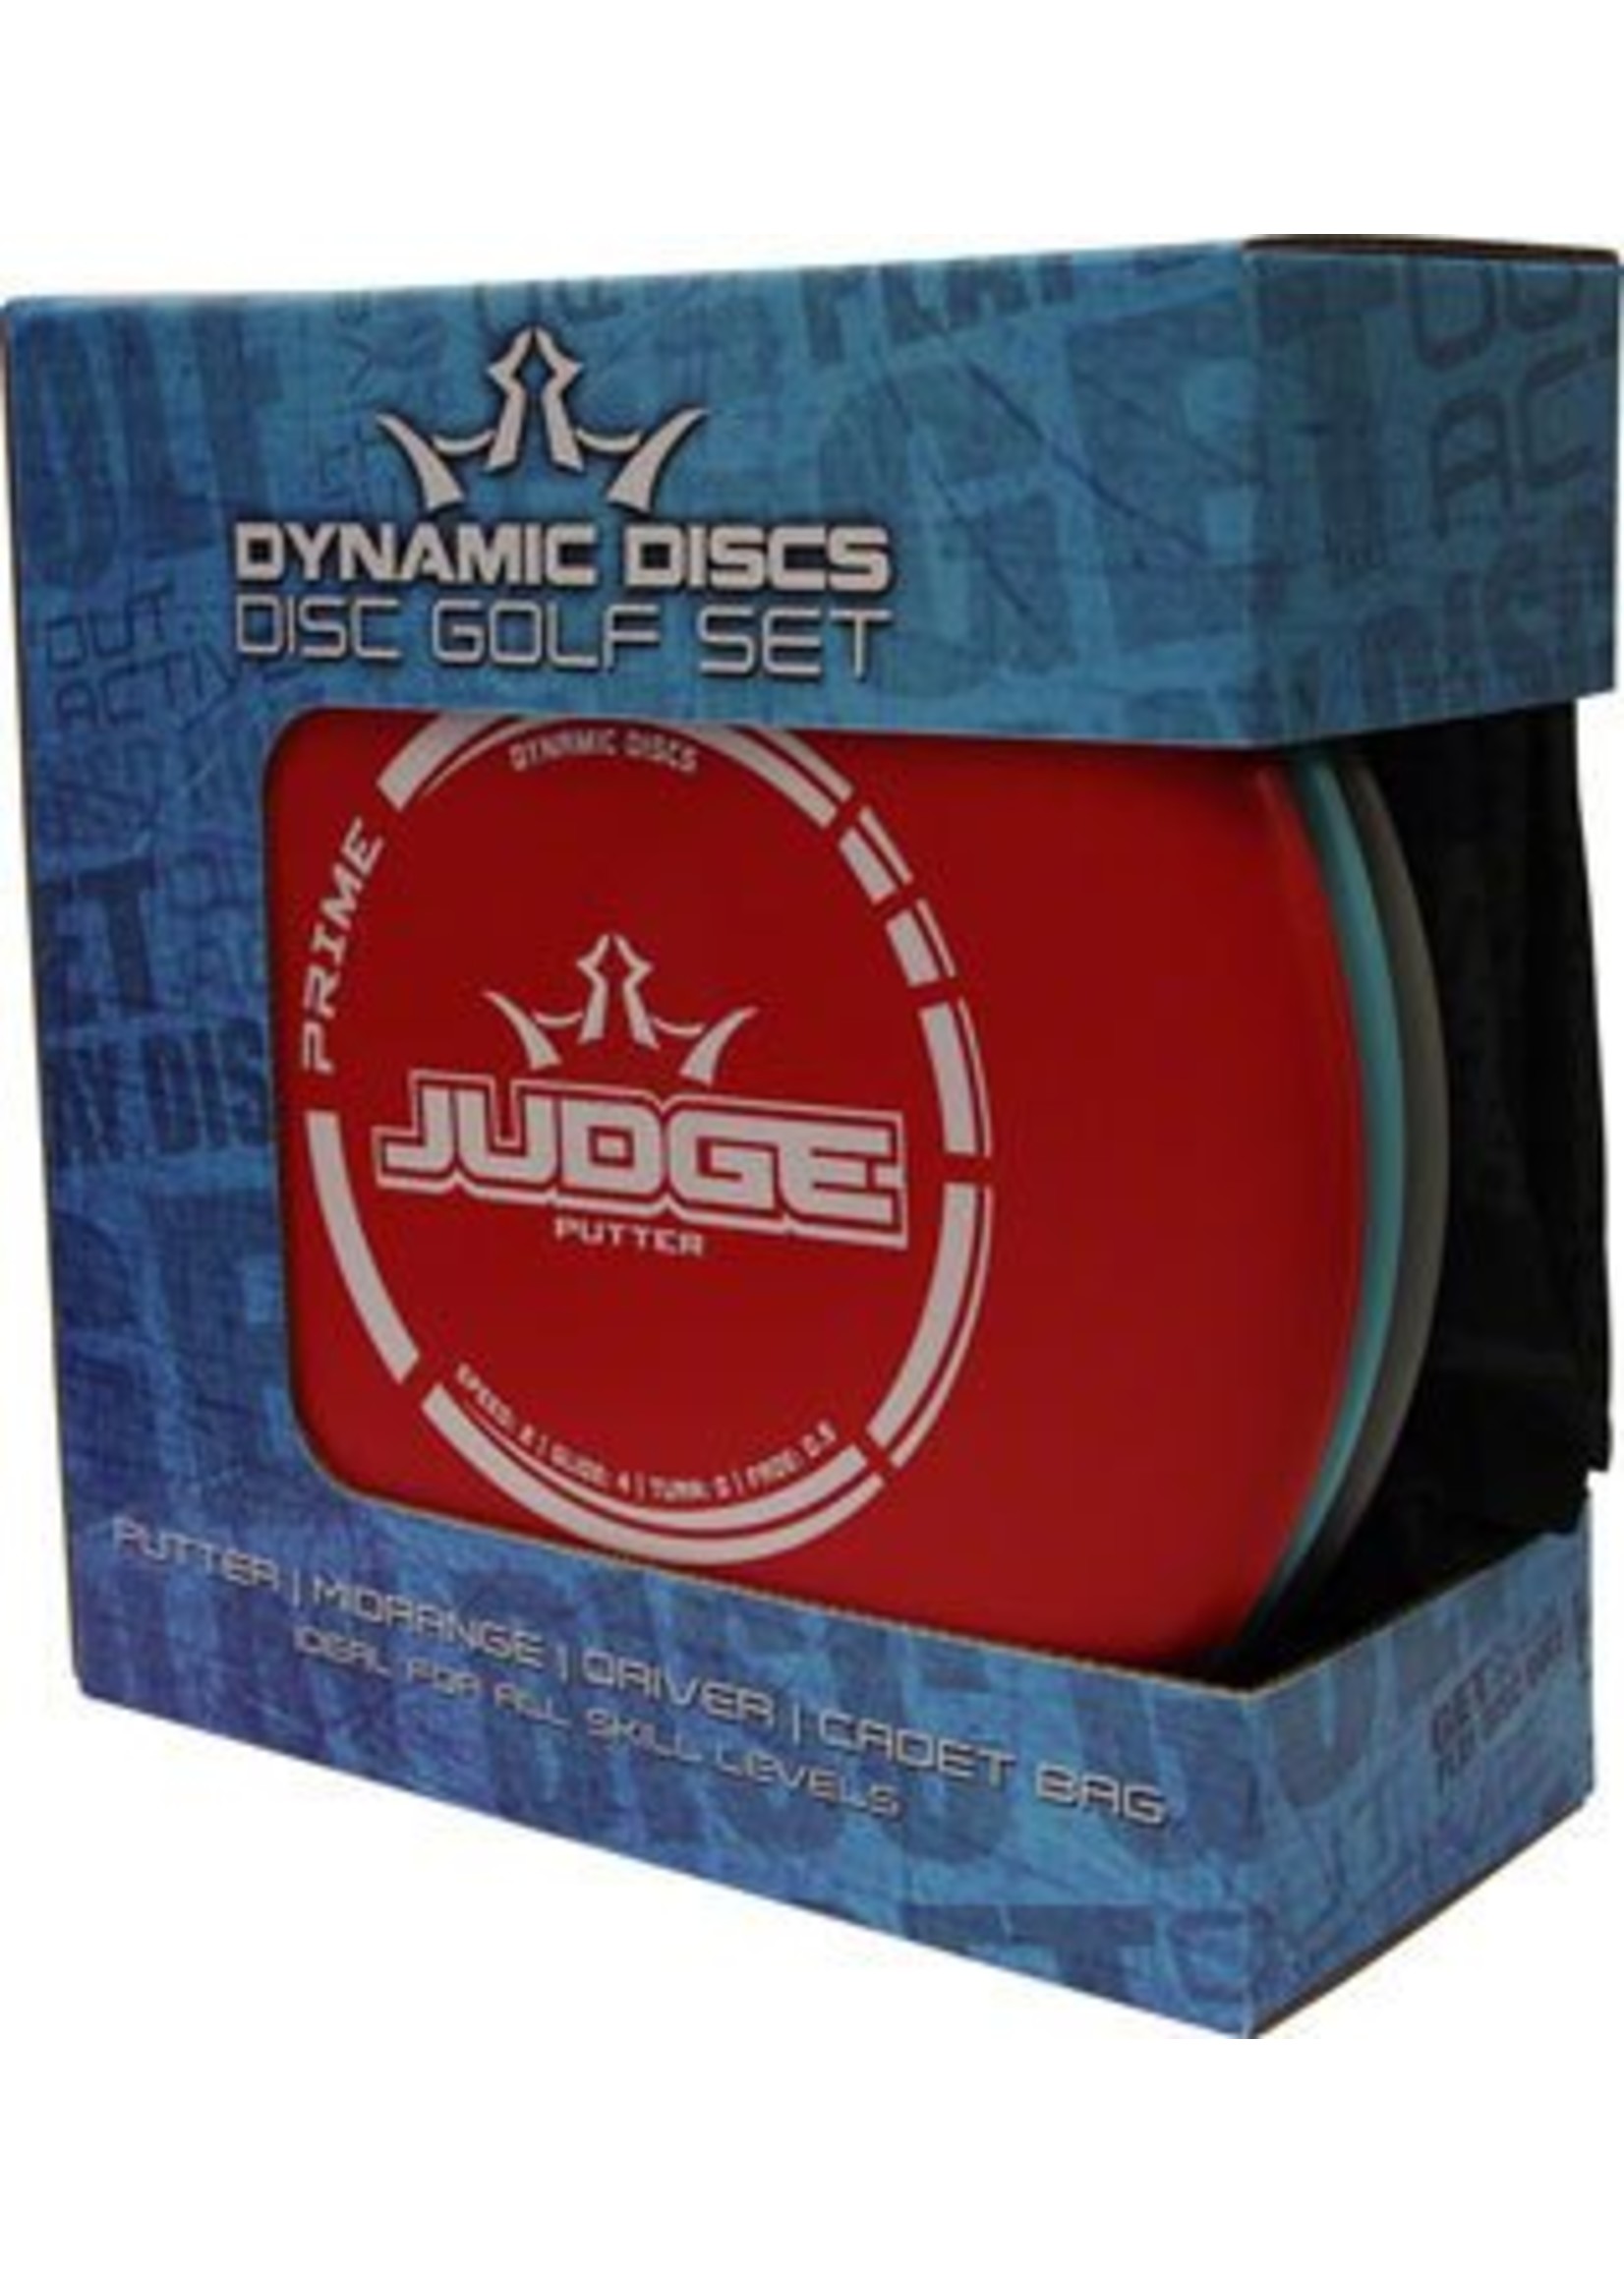 Dynamic Discs Dynamic Discs Prime Starter Disc Golf Set With Bag Only